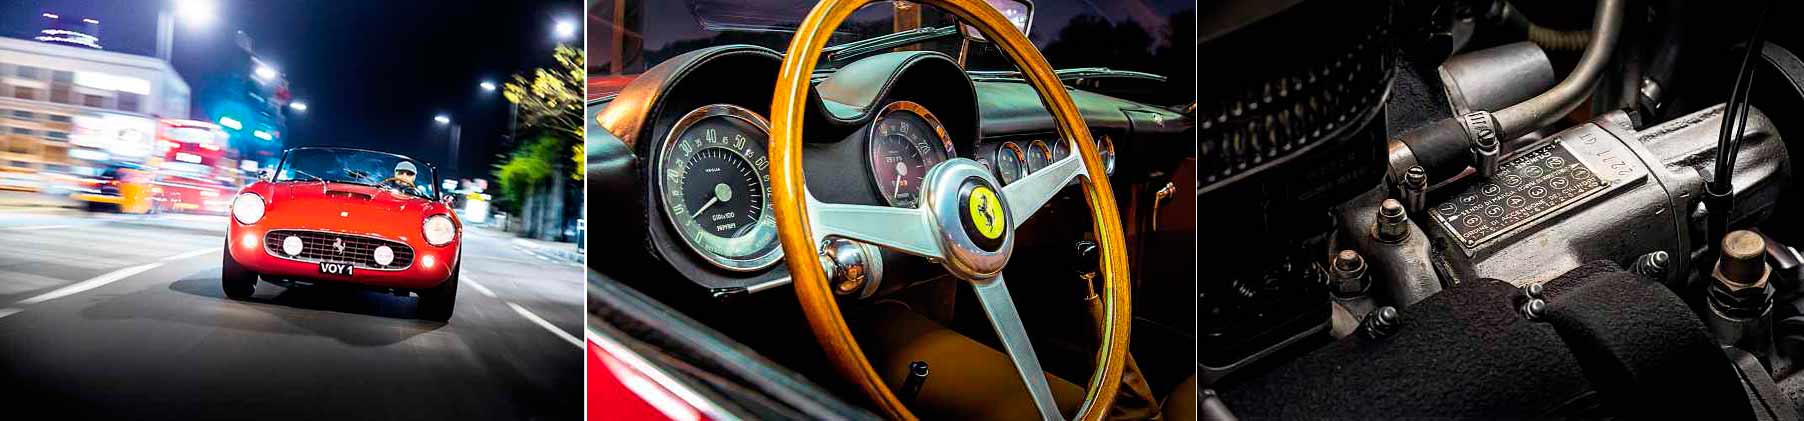 1961 Ferrari 250 GT California Spyder driven